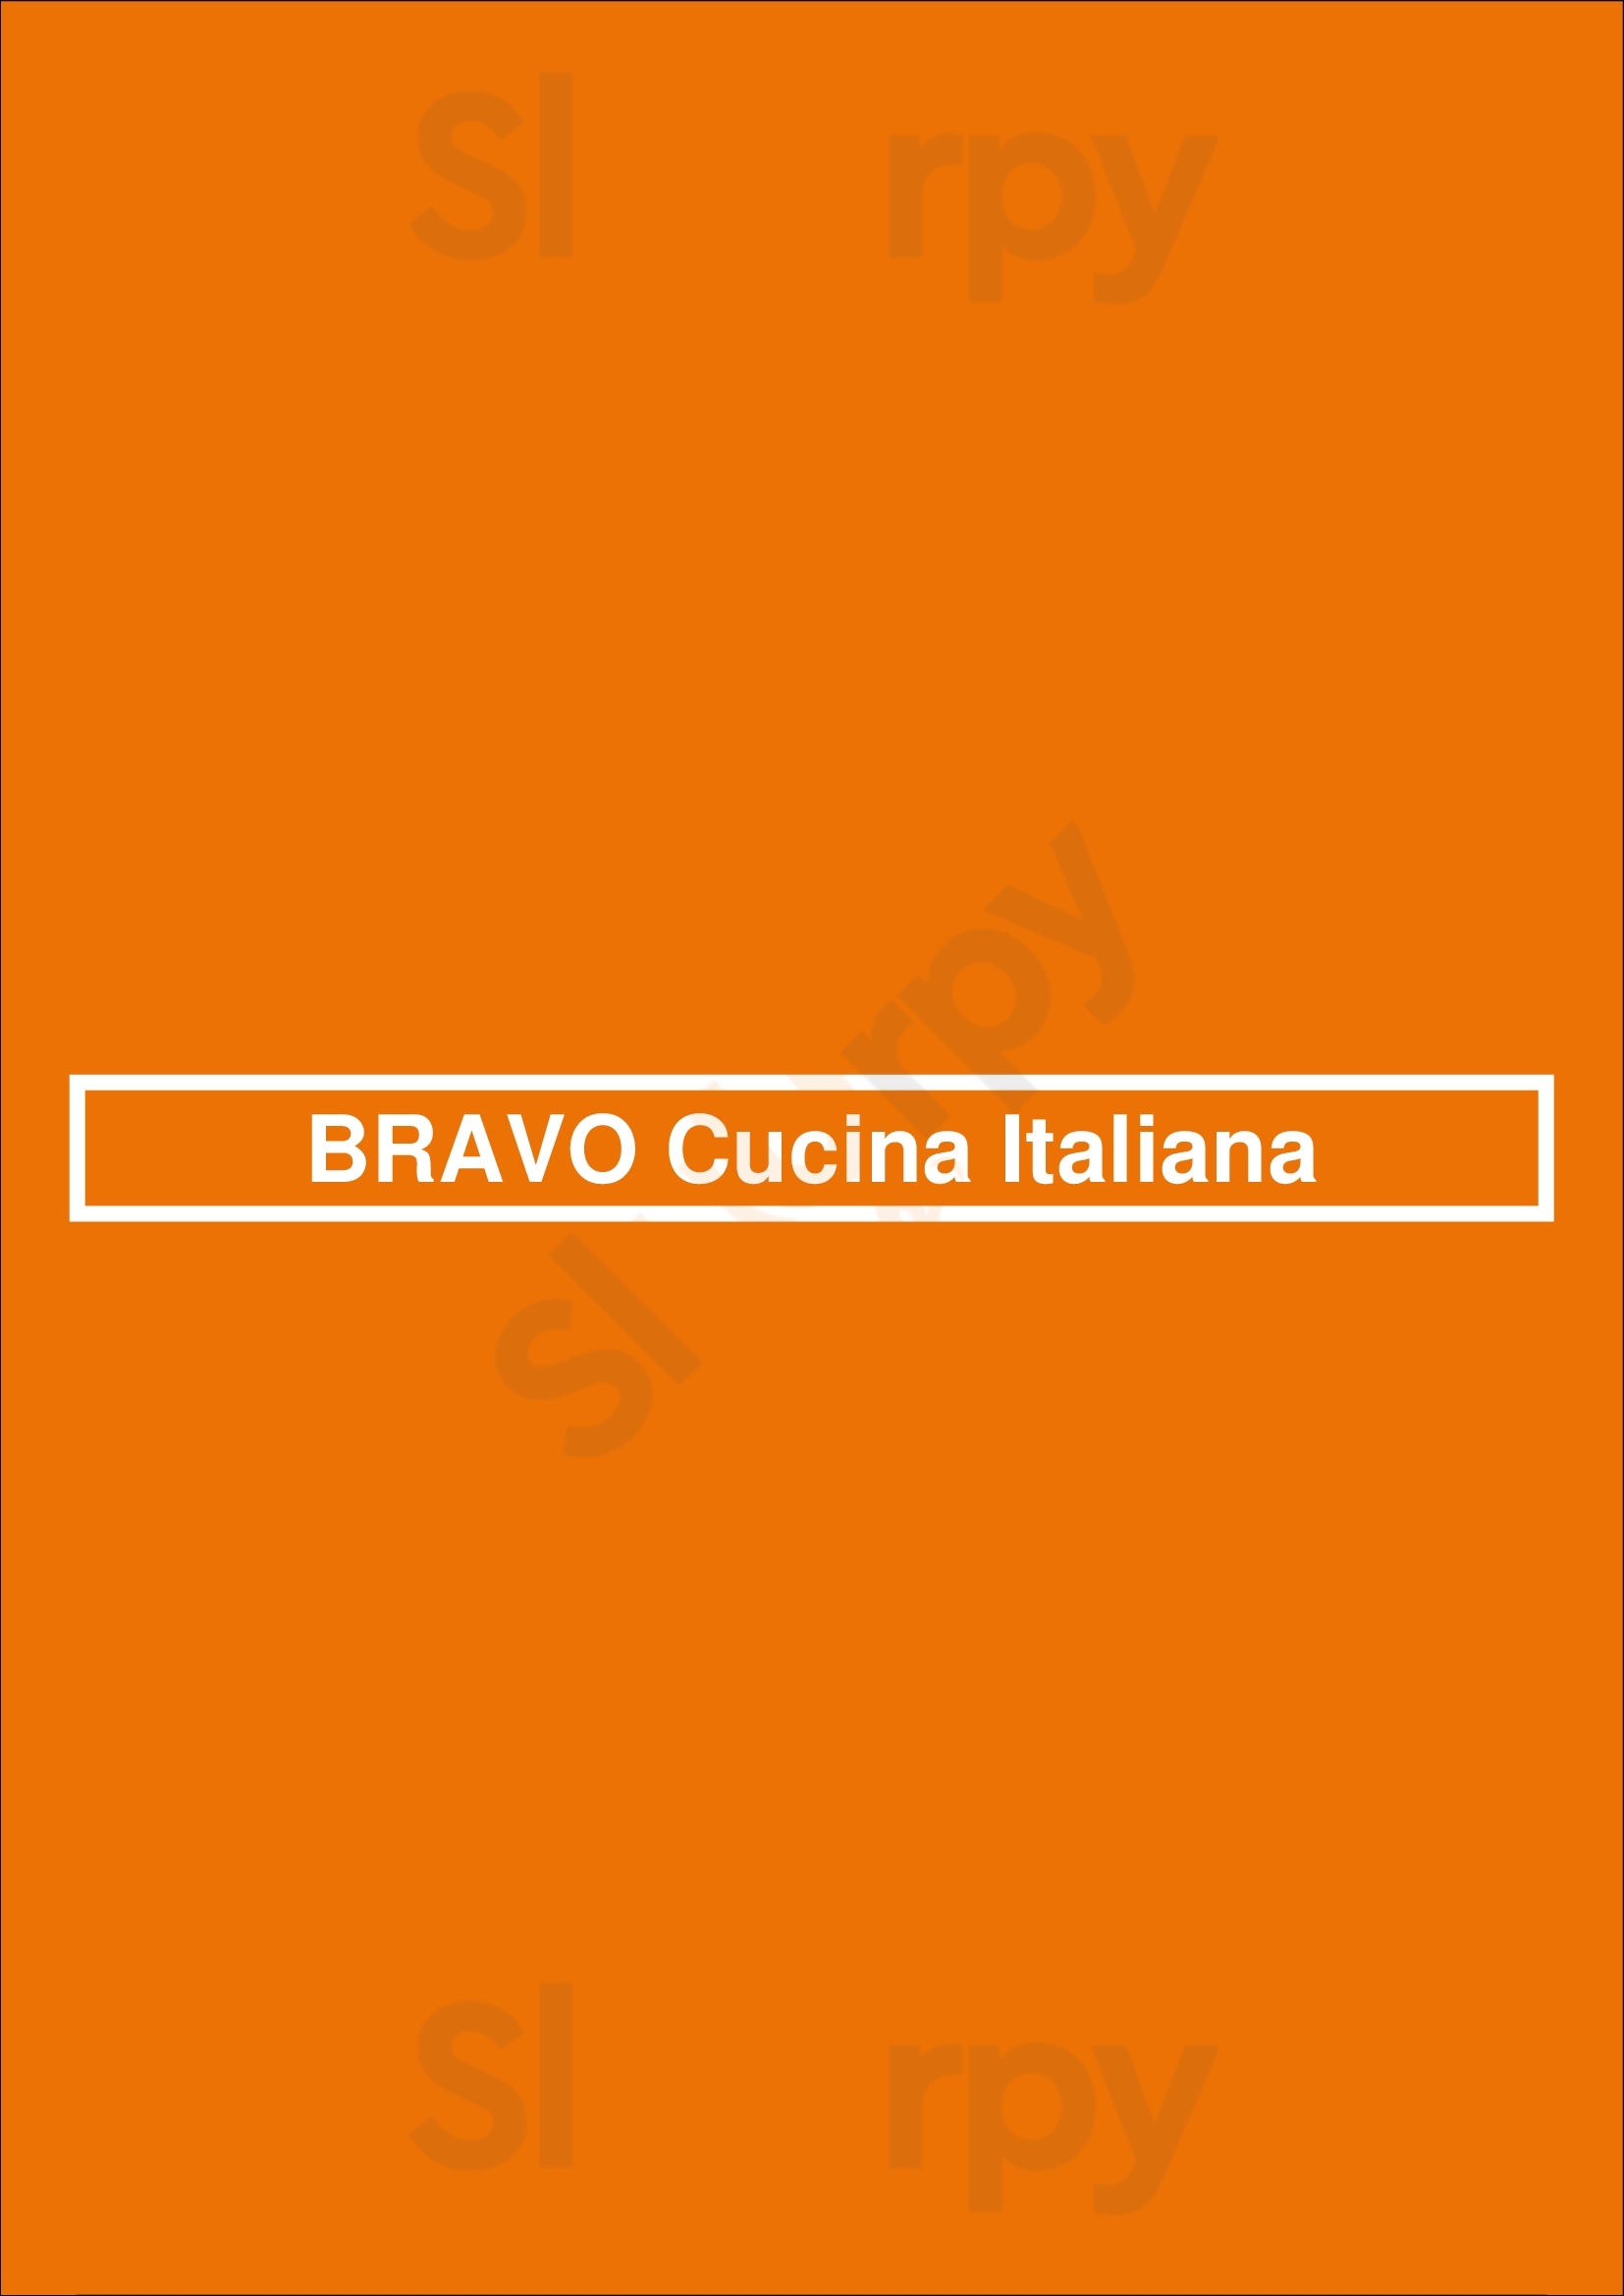 Bravo! Italian Kitchen Canton Menu - 1